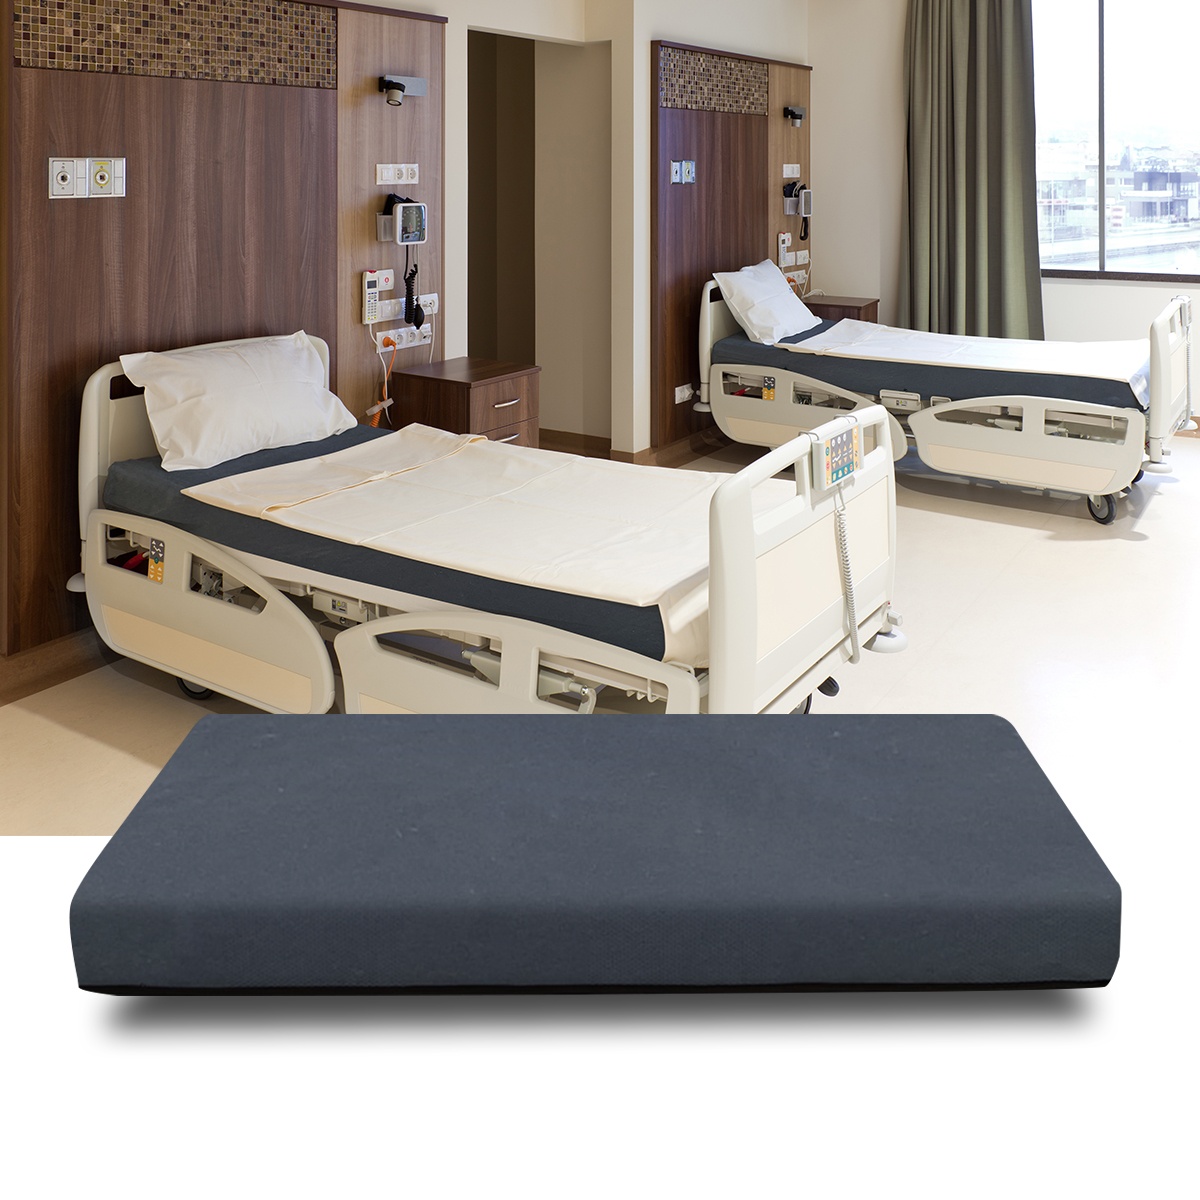 Standard Hospital Bed Mattresses